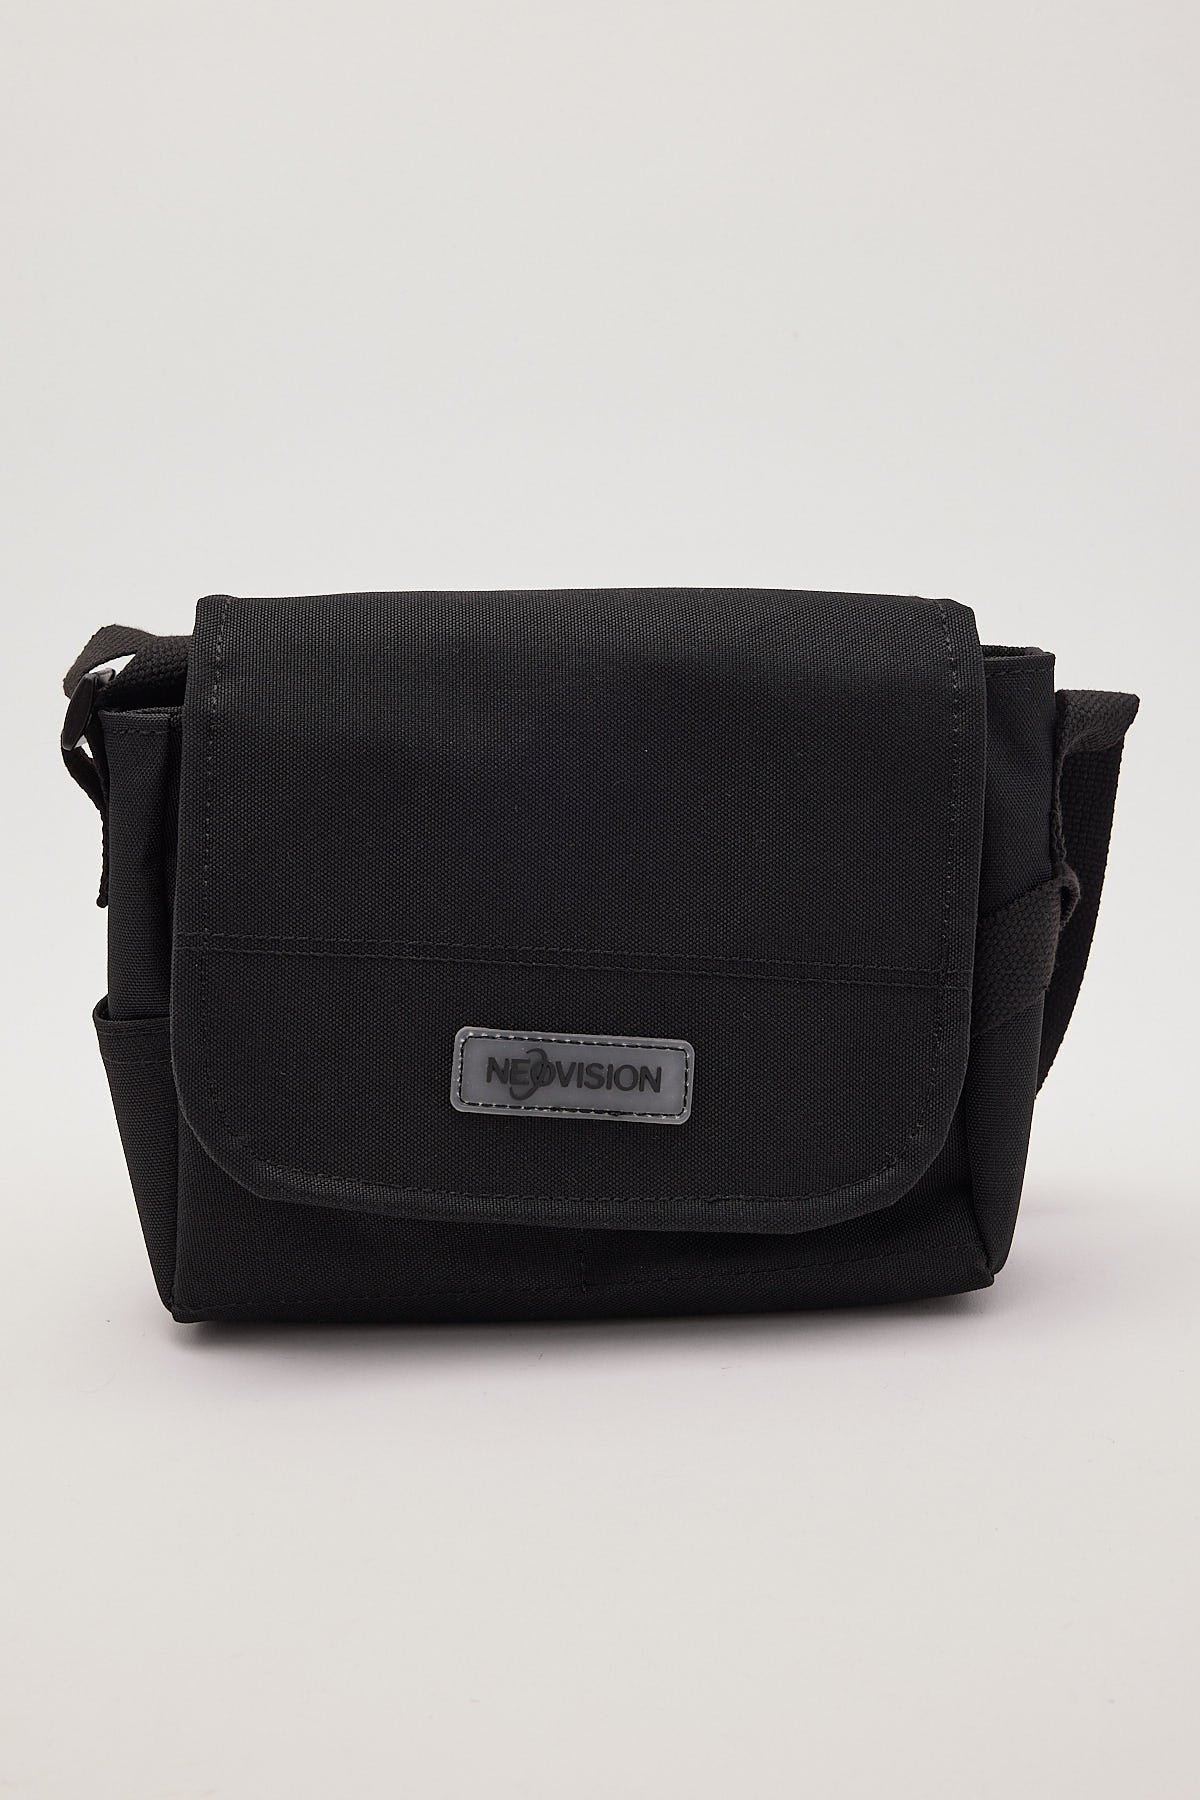 Neovision Sprint Small Messenger Bag Black